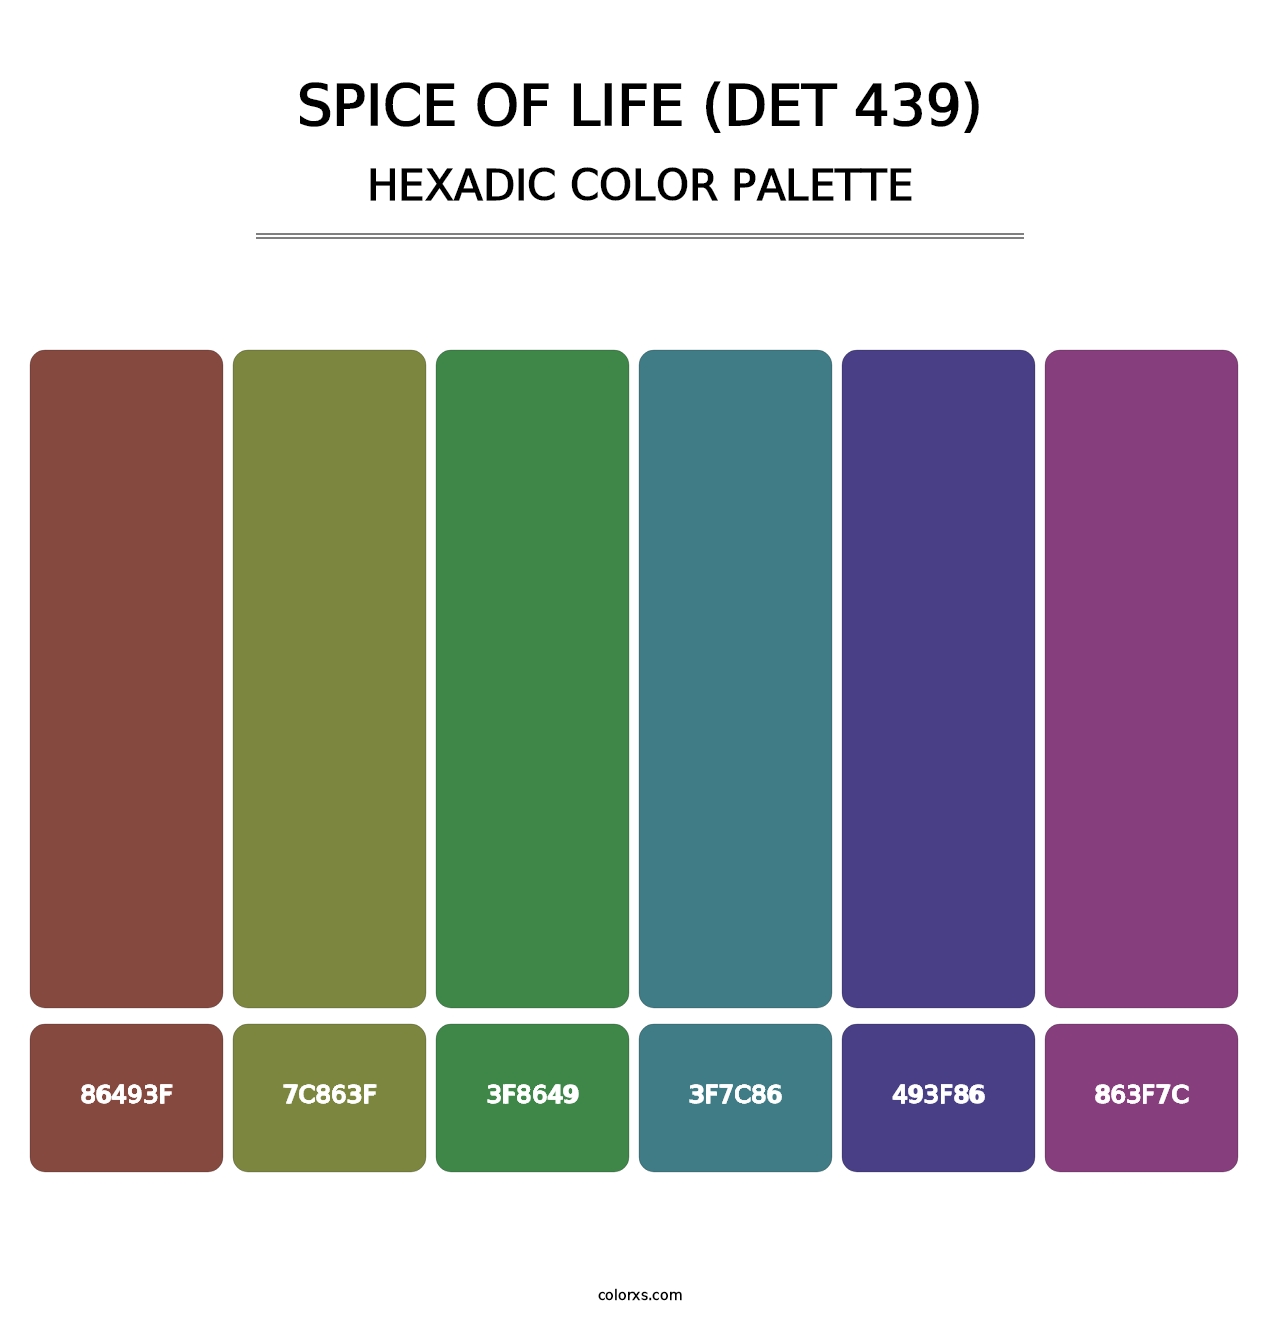 Spice of Life (DET 439) - Hexadic Color Palette